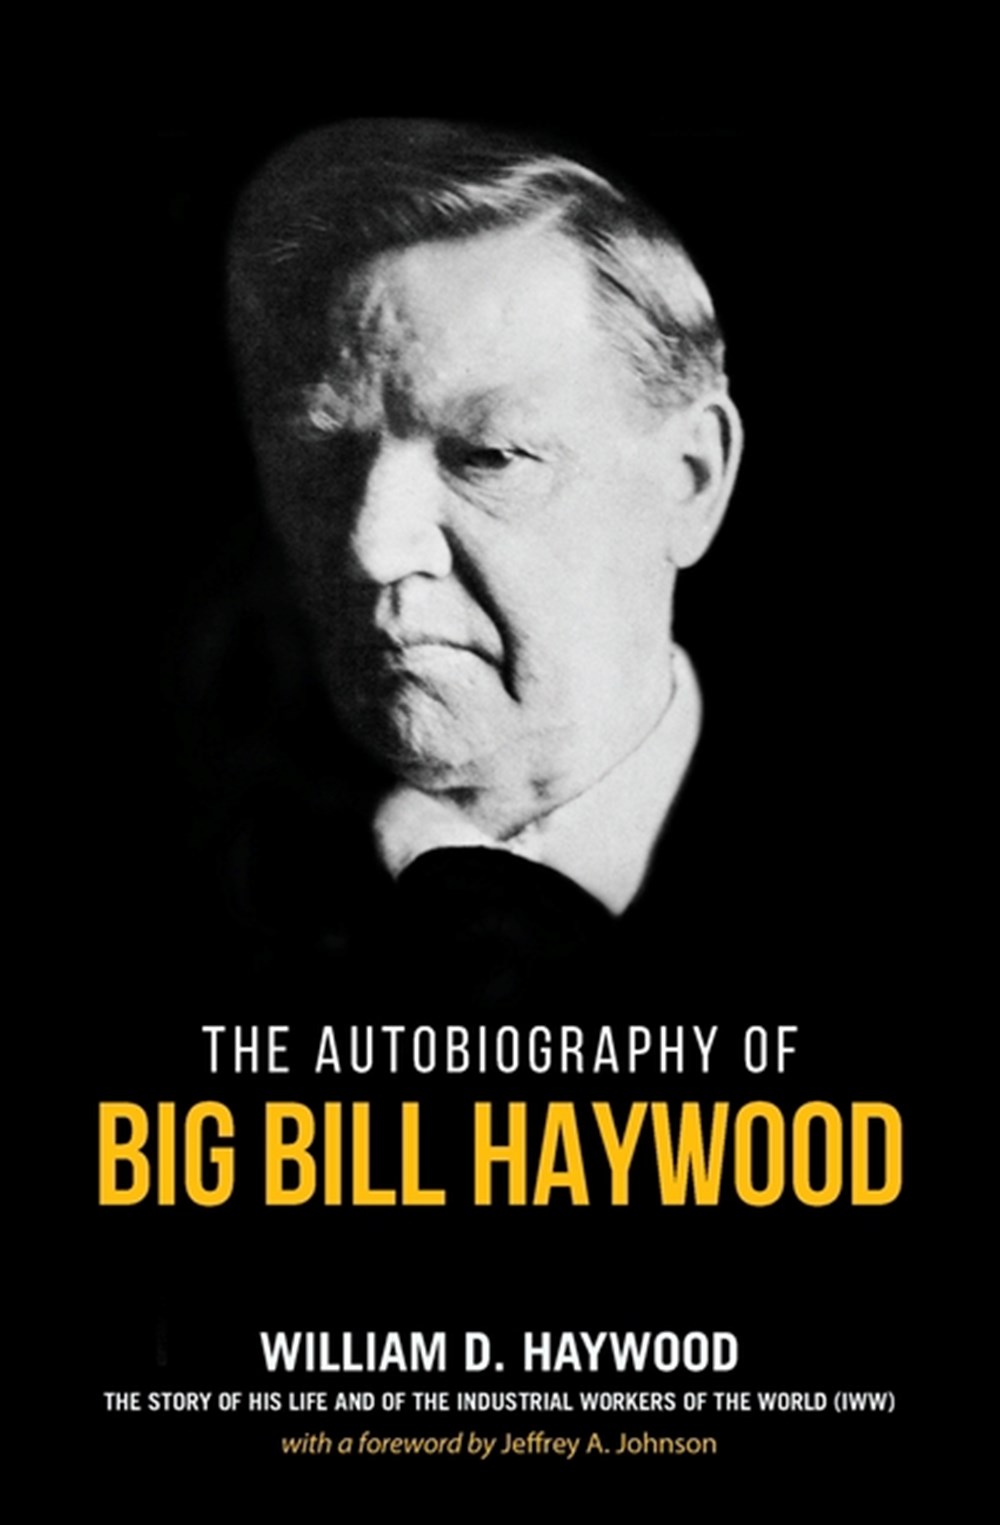 Big Bill Haywood's Book The Autobiography of Big Bill Haywood